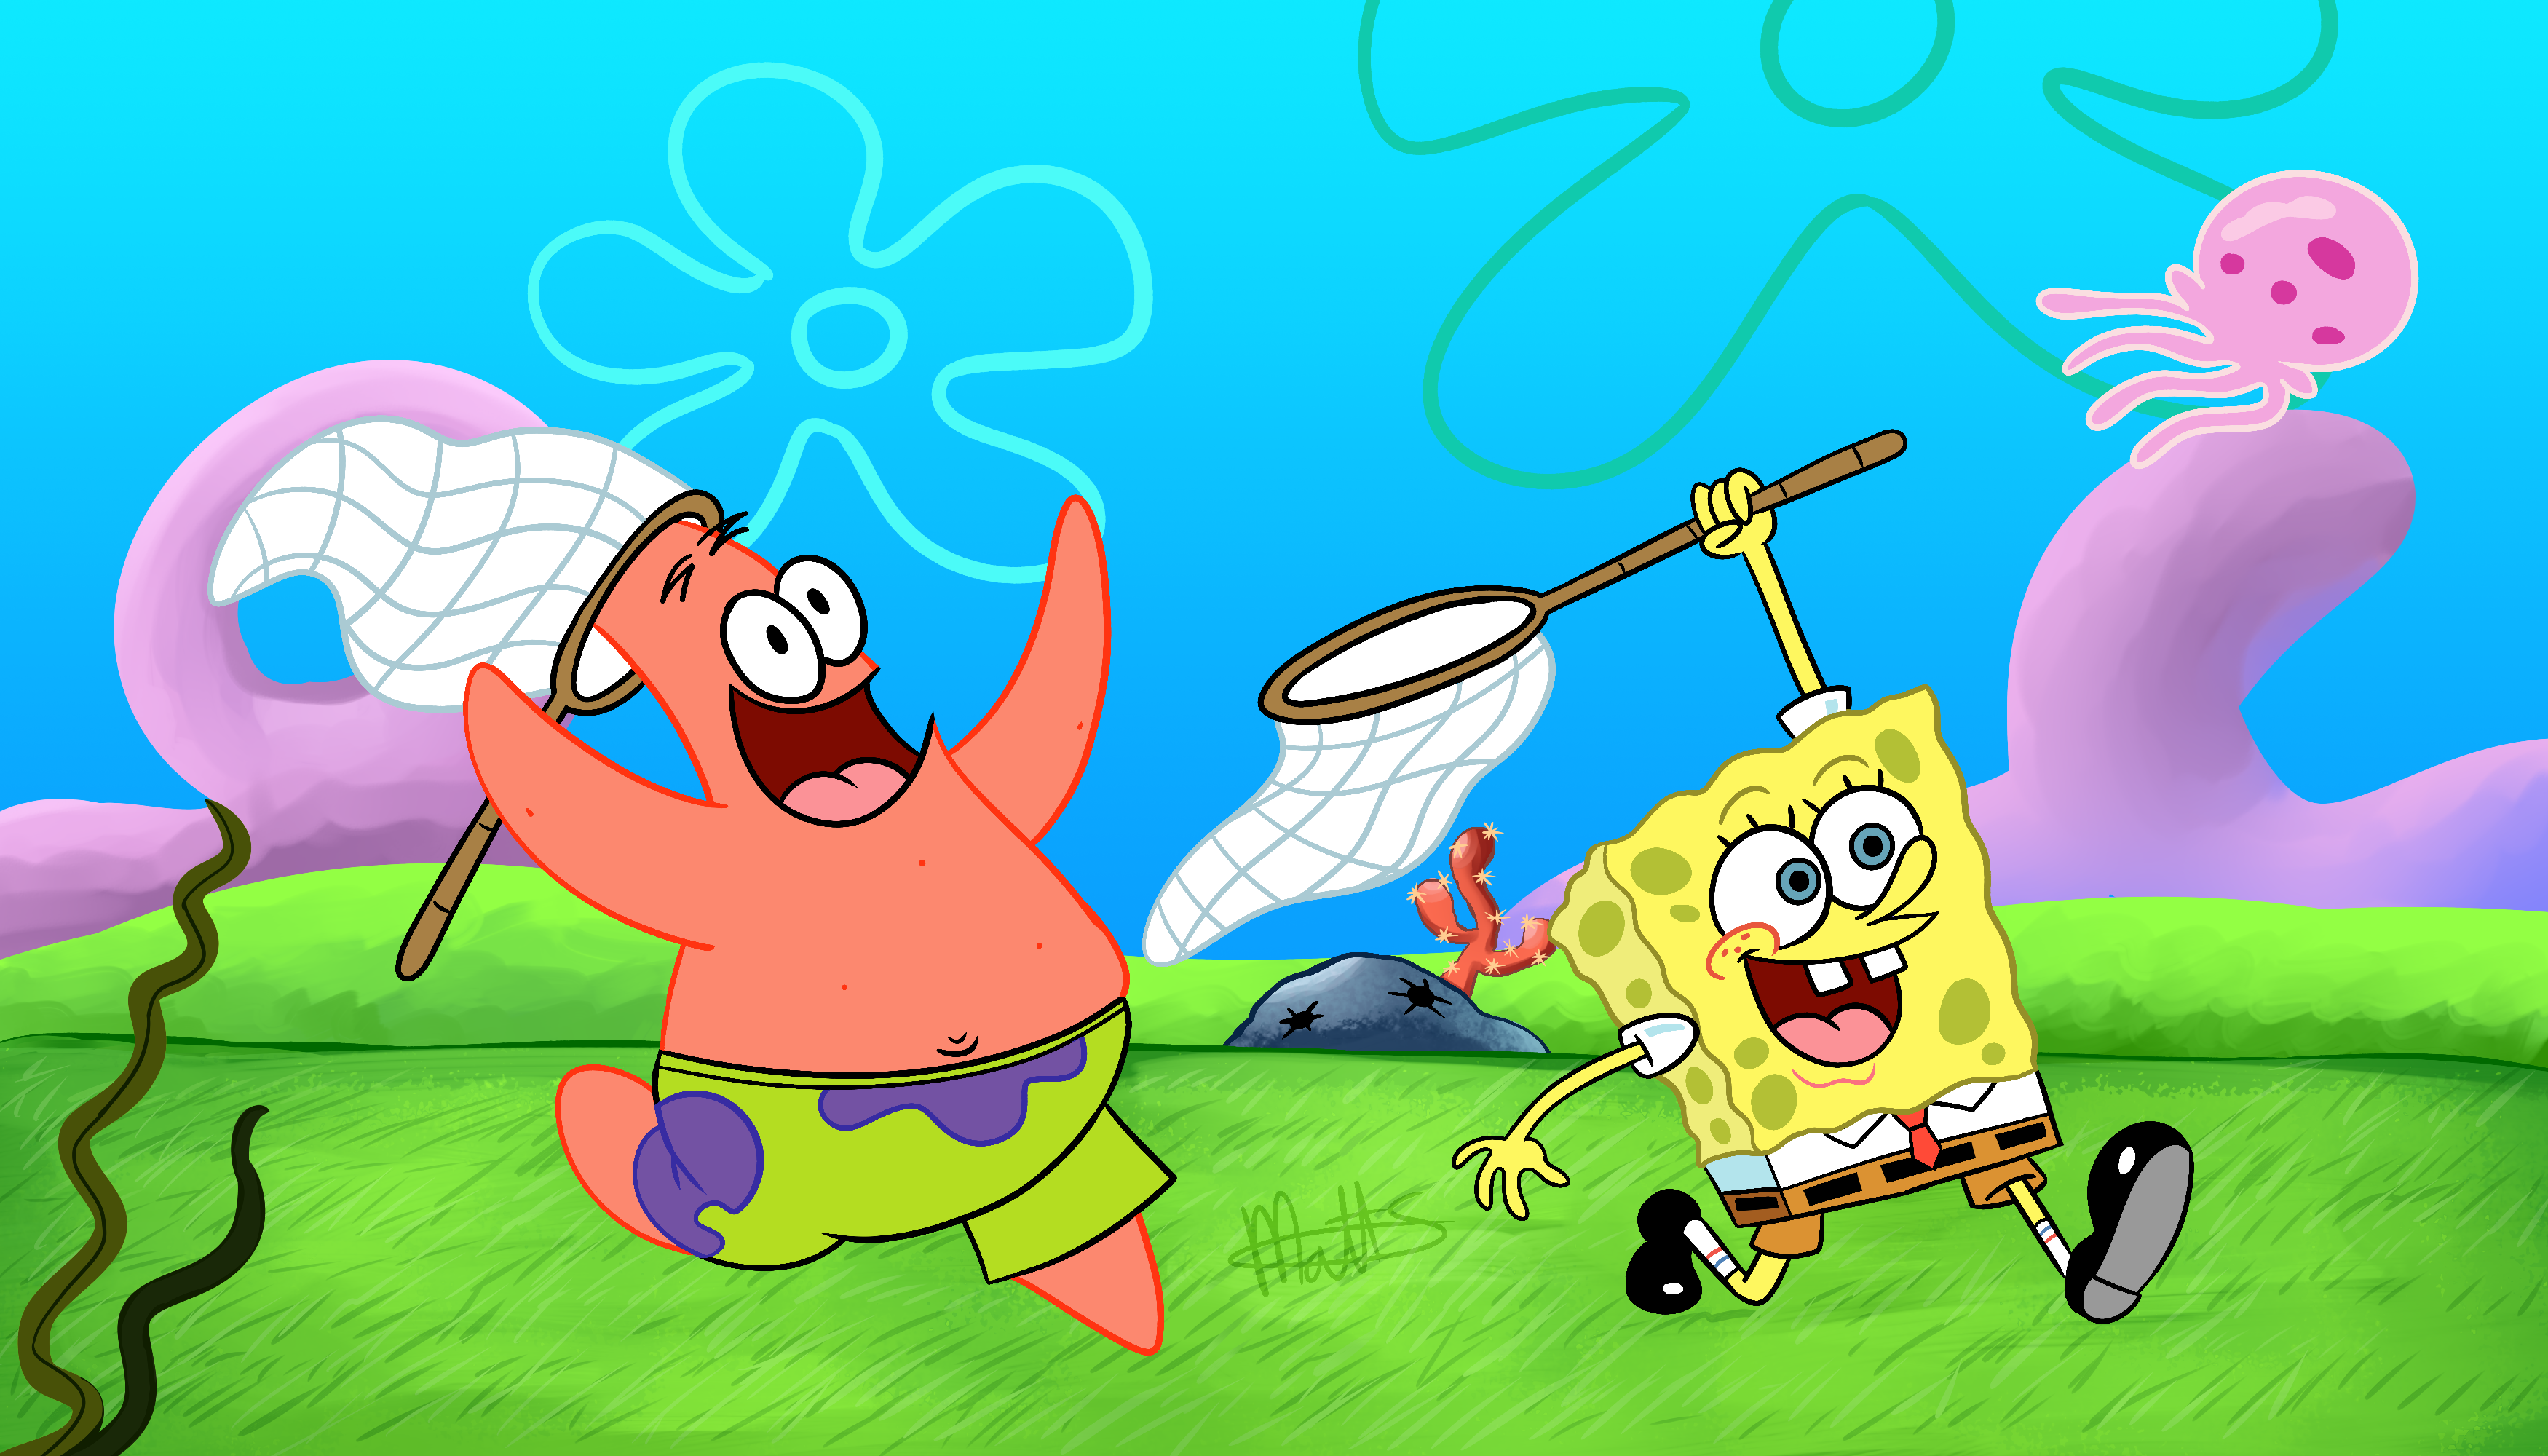 Spongebob patrick. Спанч Боб и Патрик. Спанч Боб и Патрик в хорошем к. Губка Боб и Патрик ловят медуз. Ловля медуз Спанч Боб.